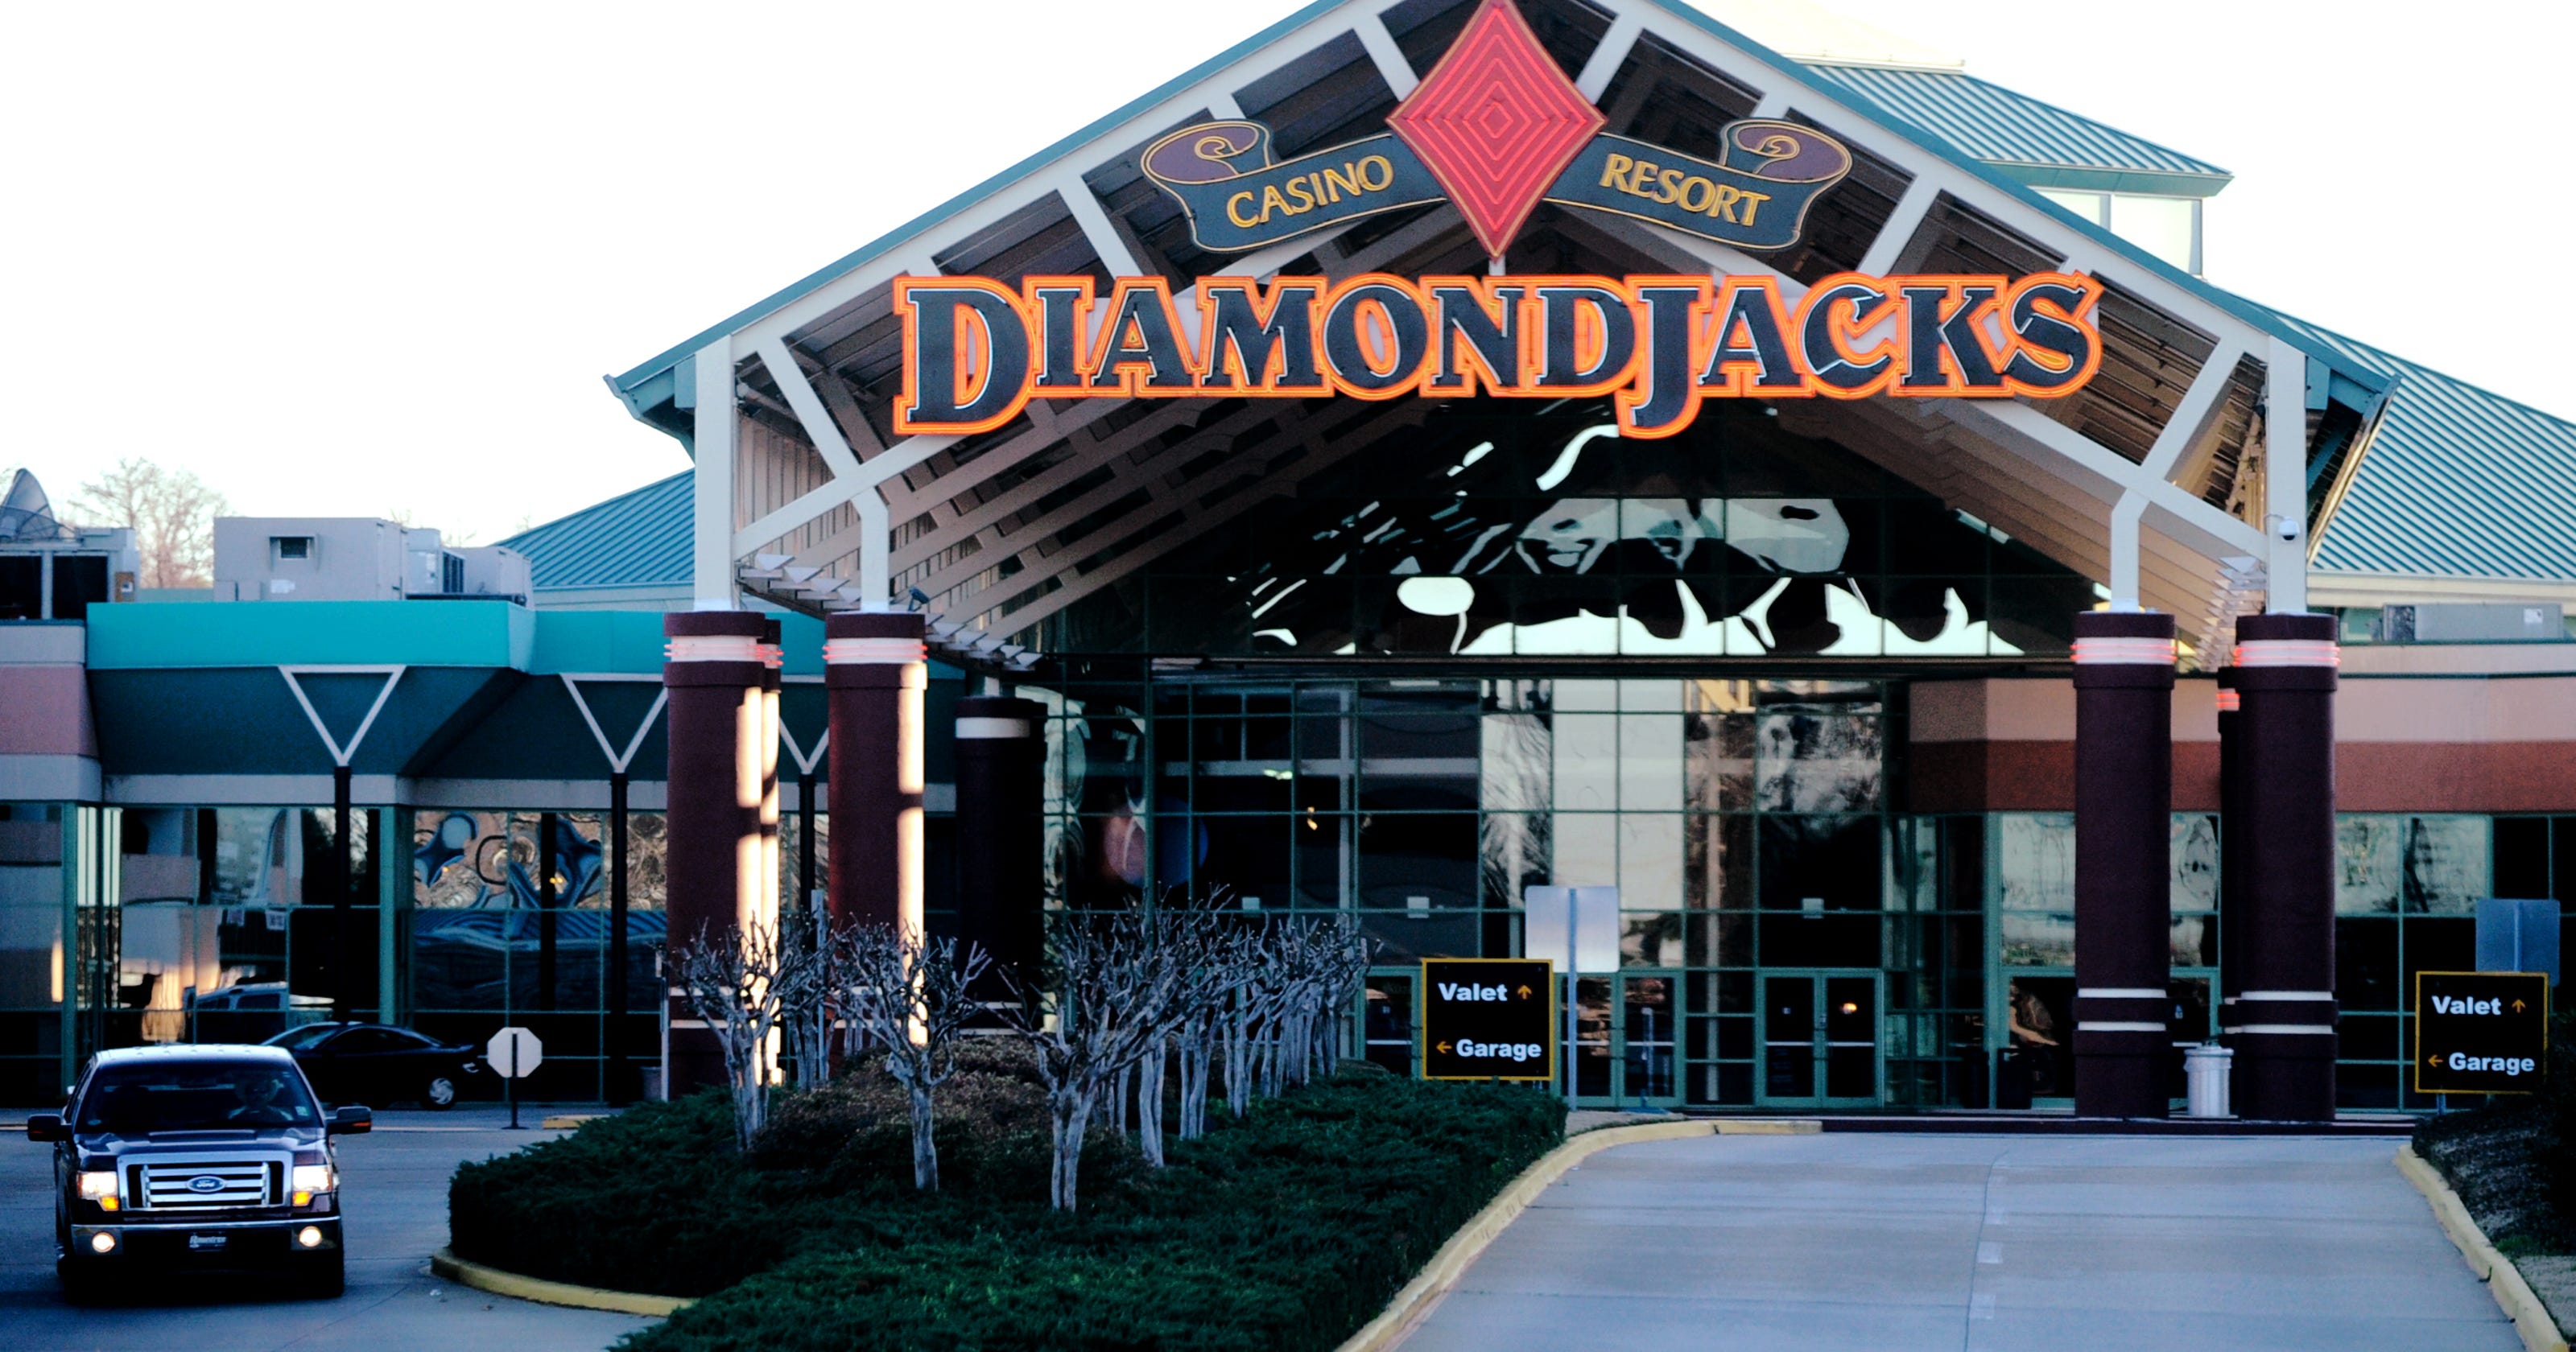 Diamond jacks casino shreveport concerts 2020